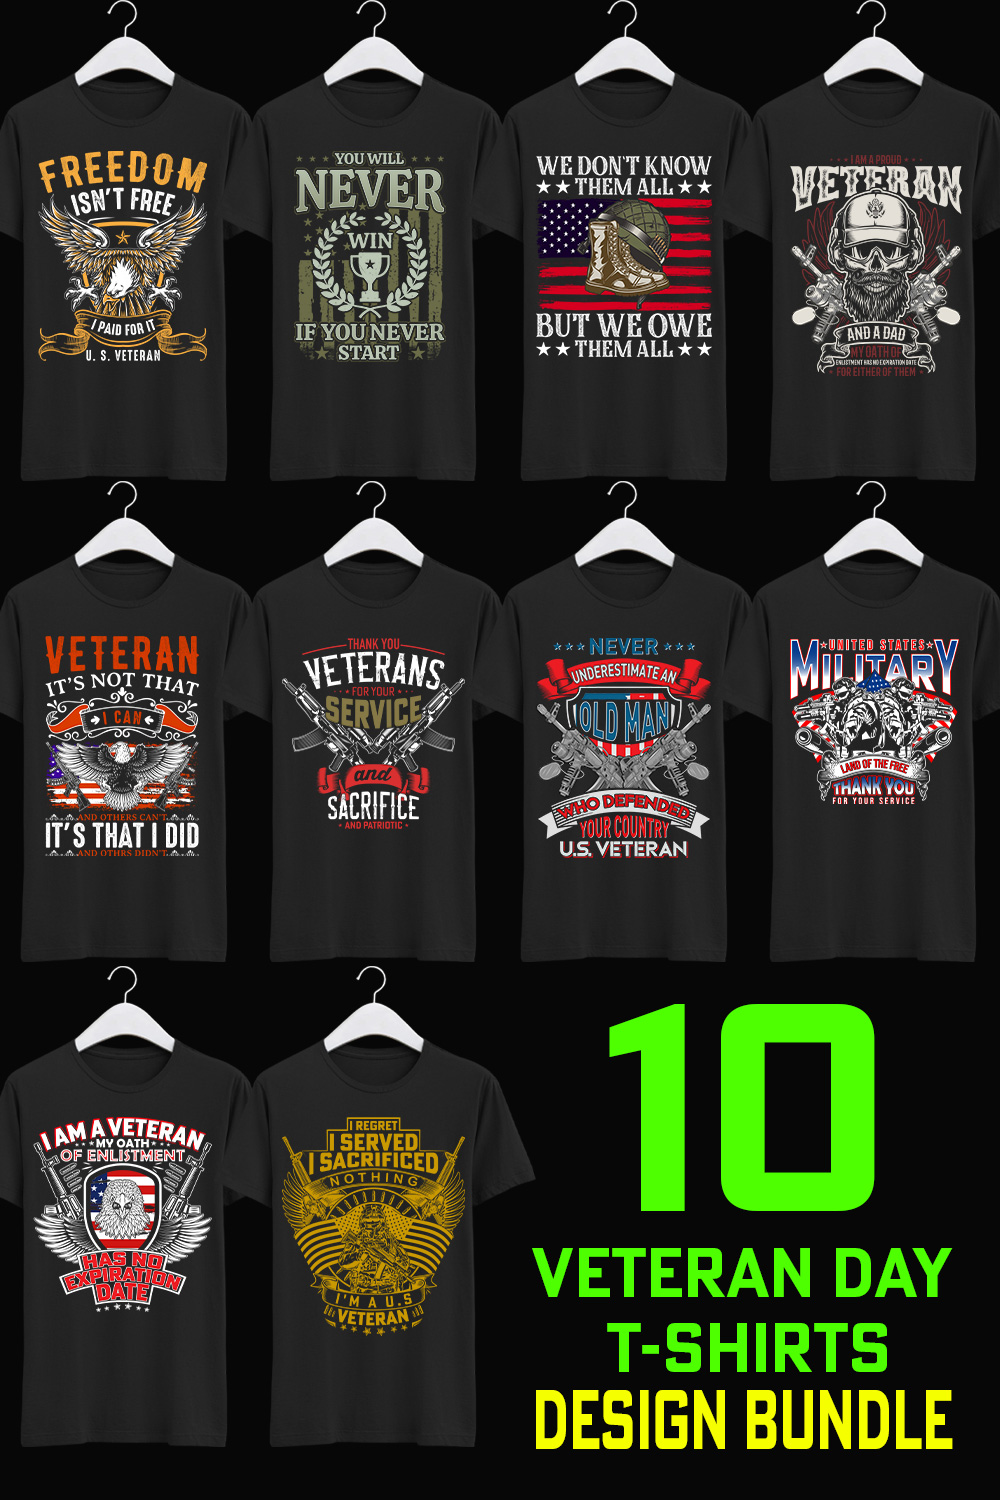 Veteran's Day T-Shirt Design pinterest preview image.